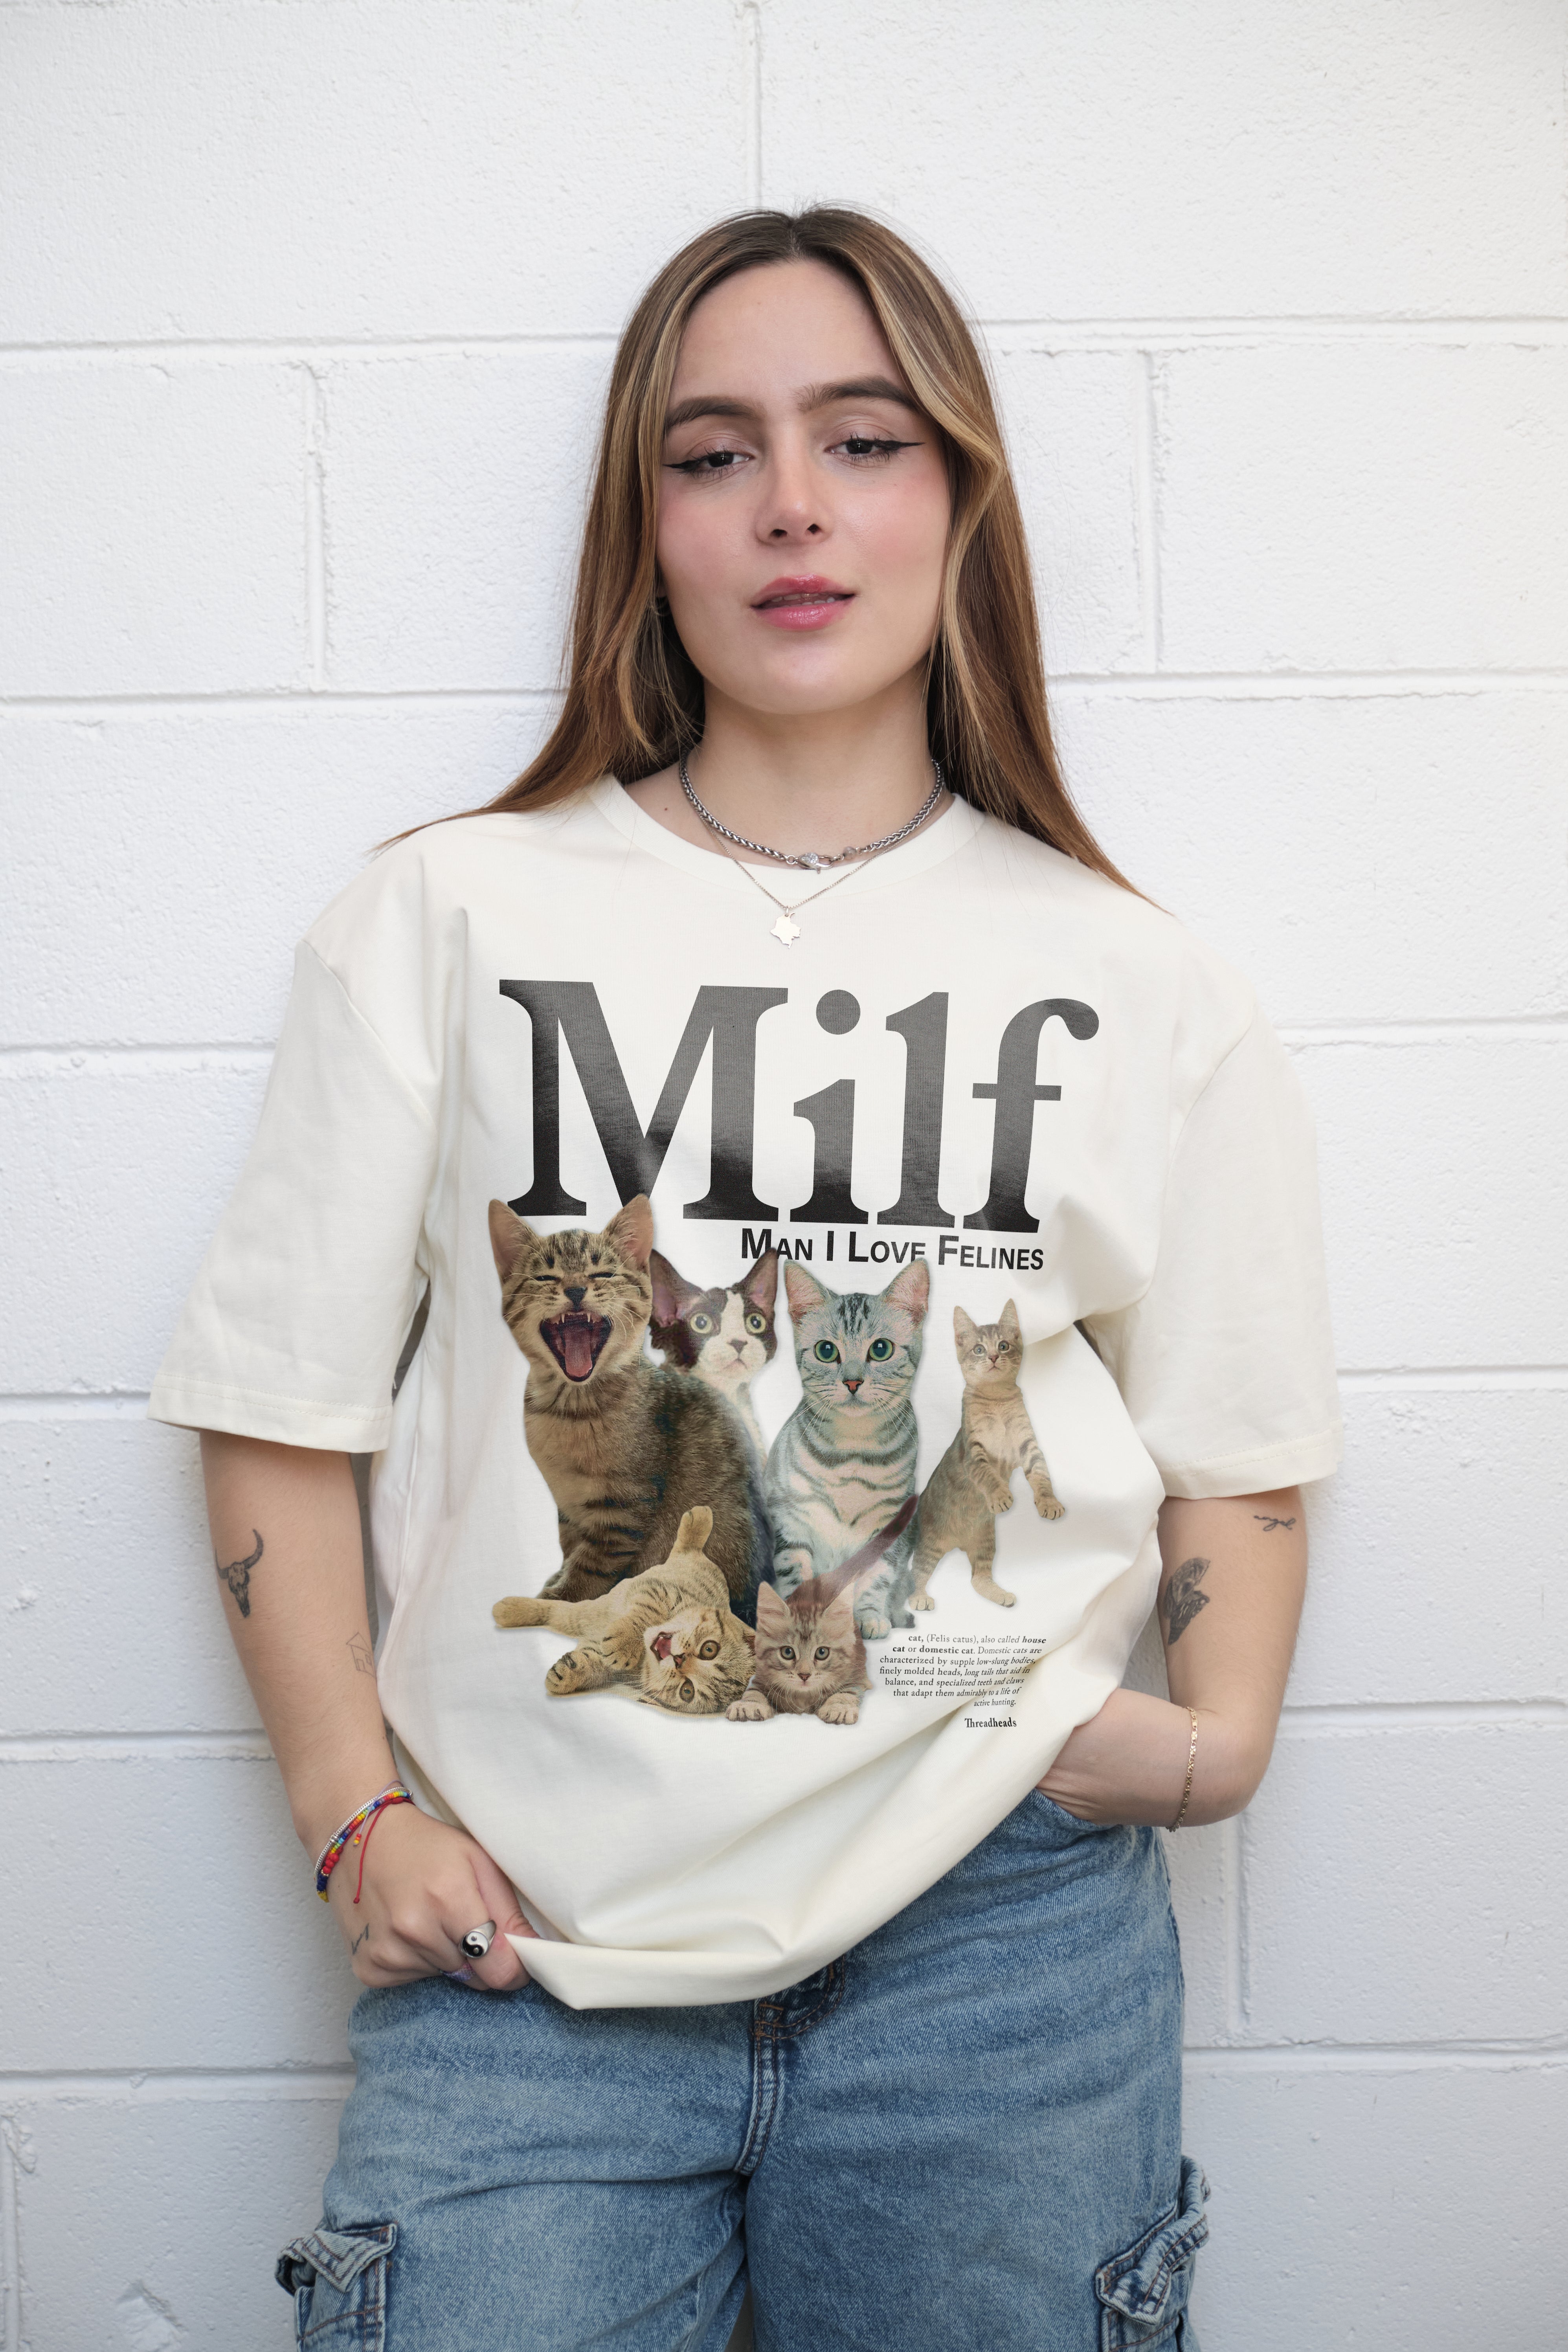 Man I Love Felines T-Shirt